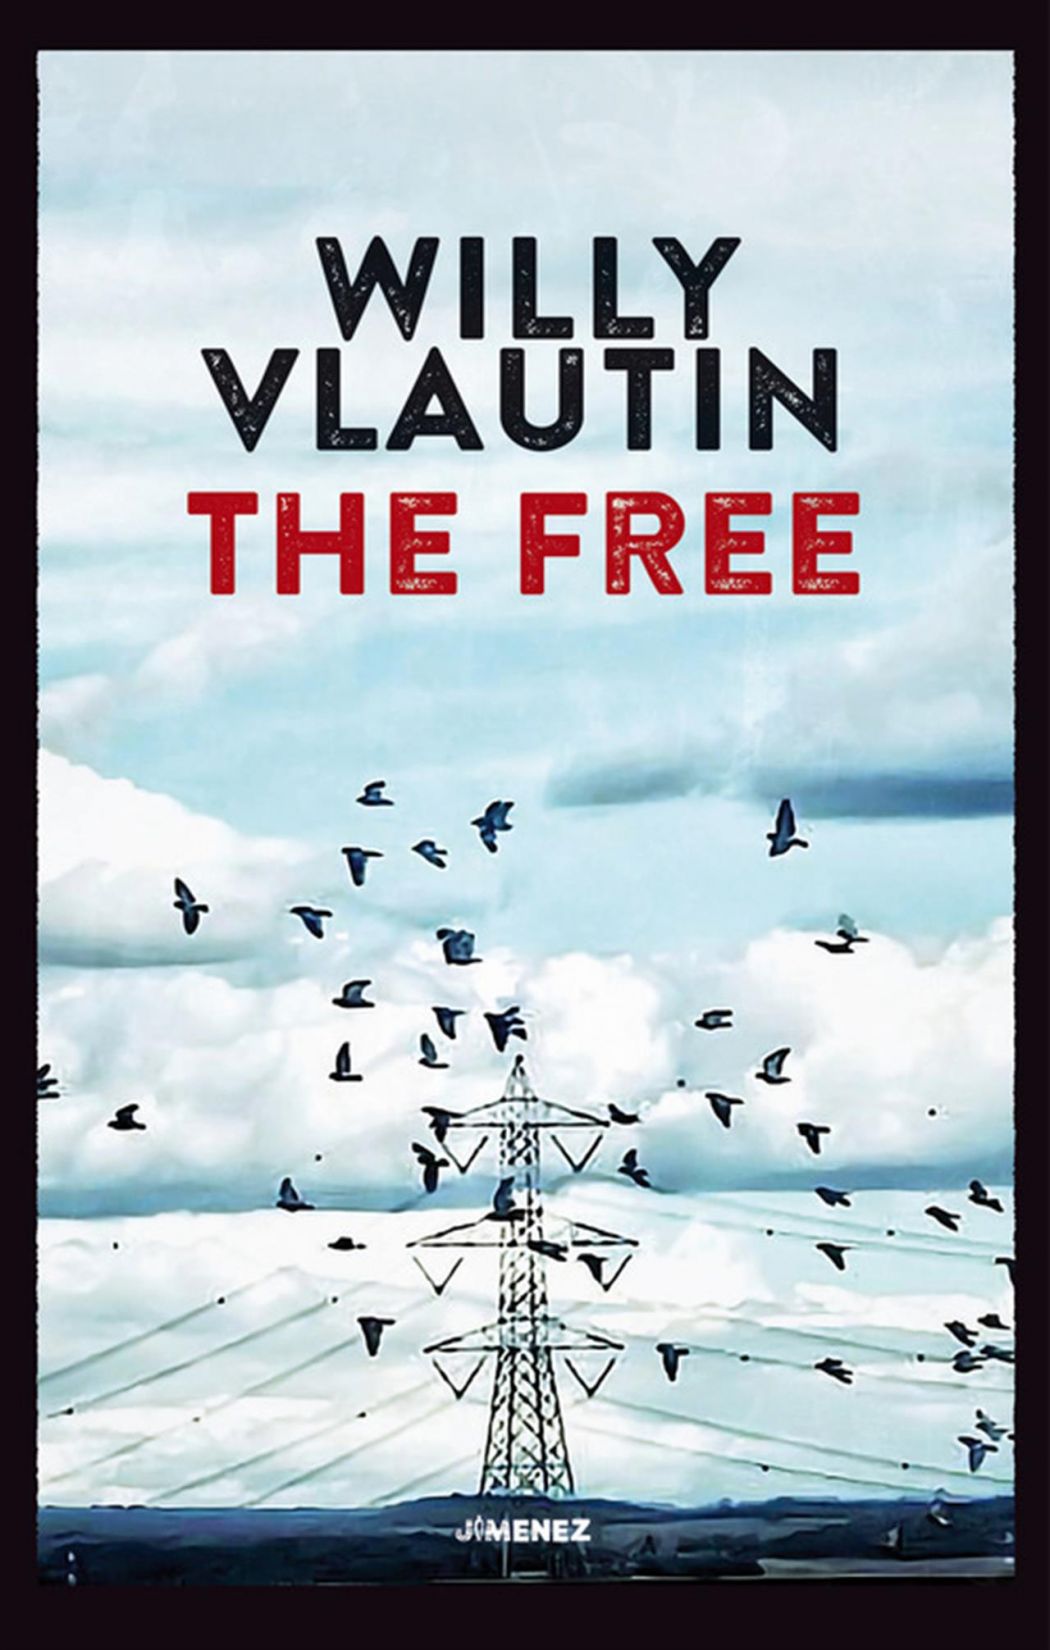 Willy Vlautin: 'The free